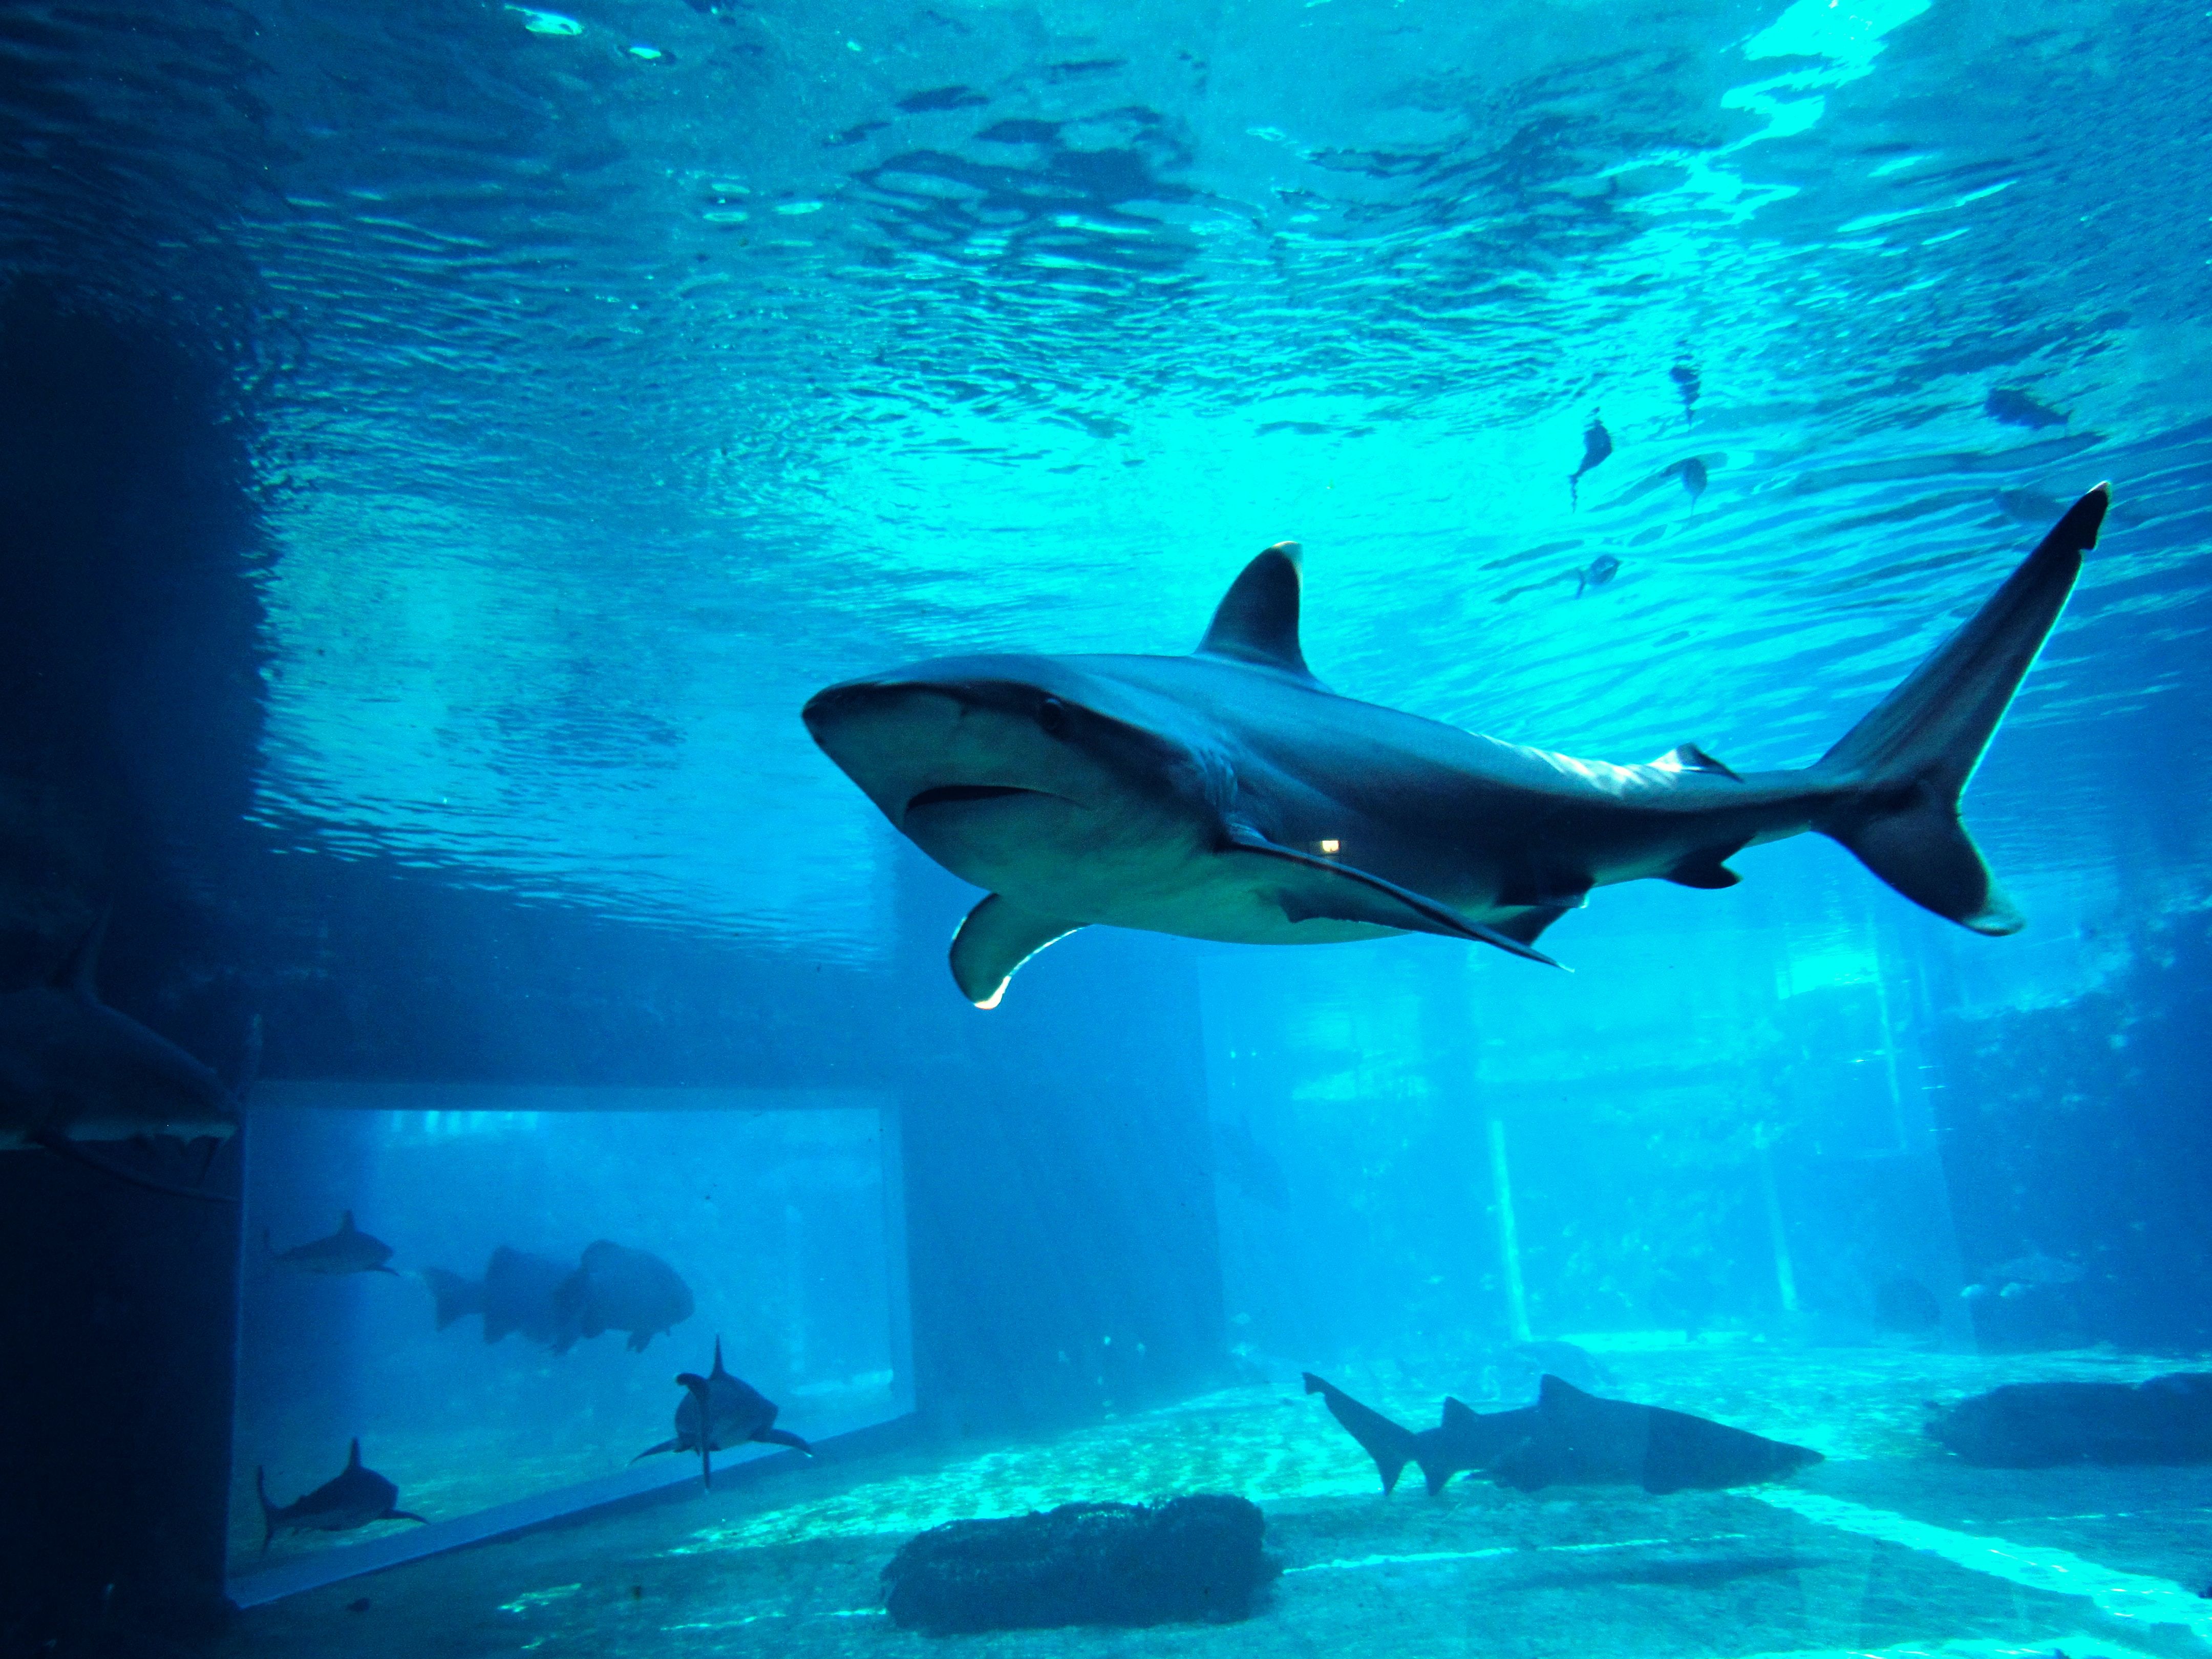 Shark swimming at UShaka Marine World in South Africa